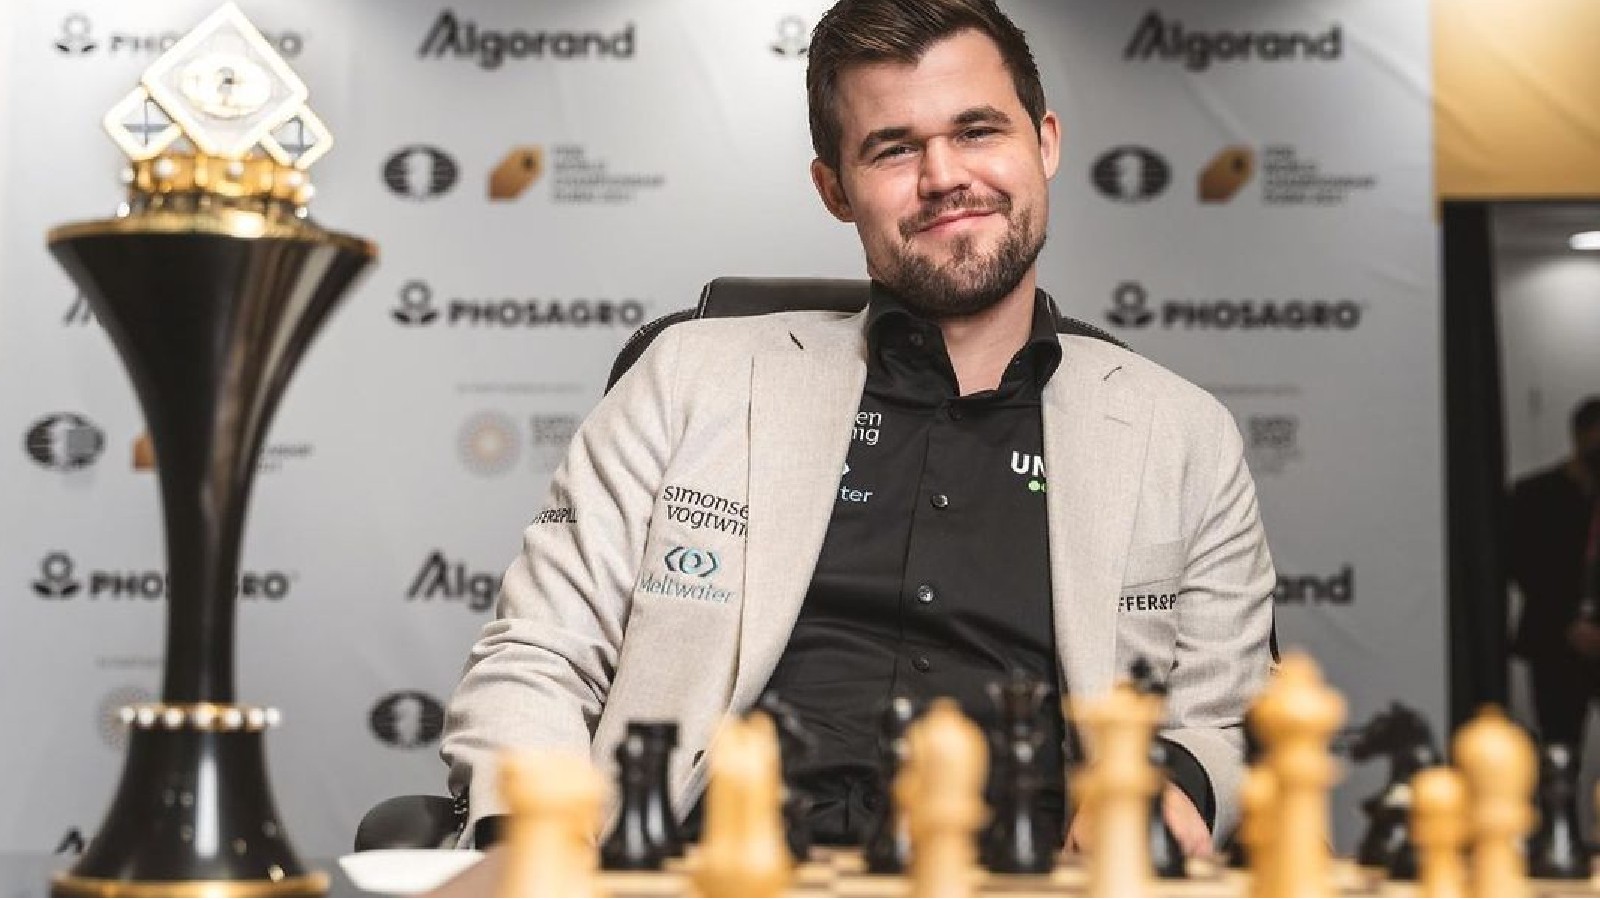 Vladimir Kramnik boycotts Chess.com, blames “obvious cheaters” after Hans  Niemann defeat - Dexerto